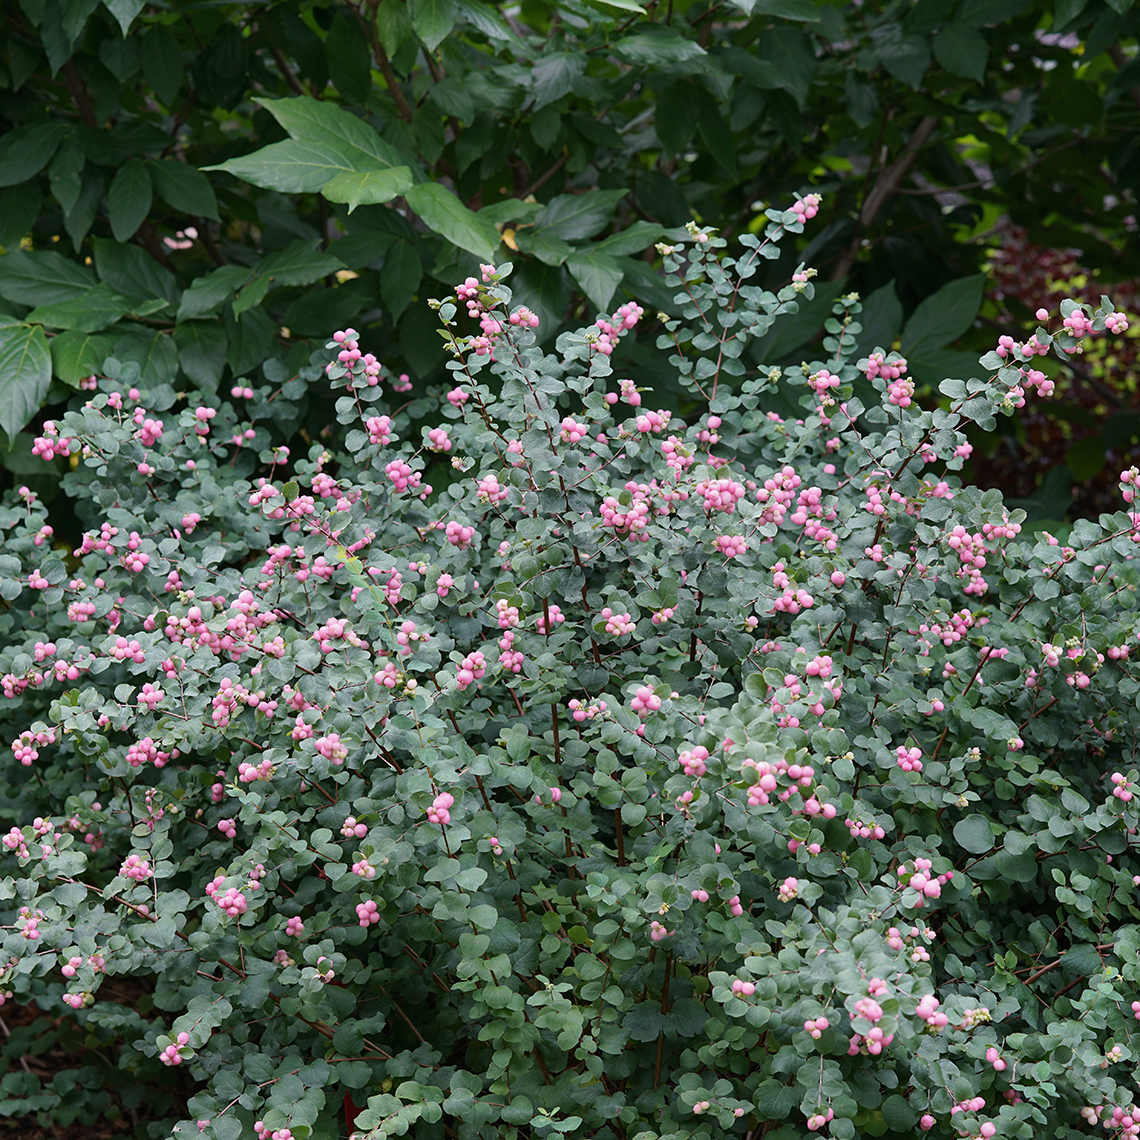 Proud Berry symphoricarpos shrub in a landscape